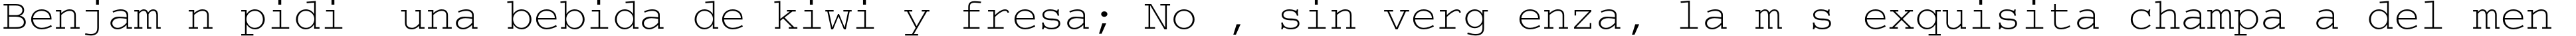 Пример написания шрифтом CourierC текста на испанском